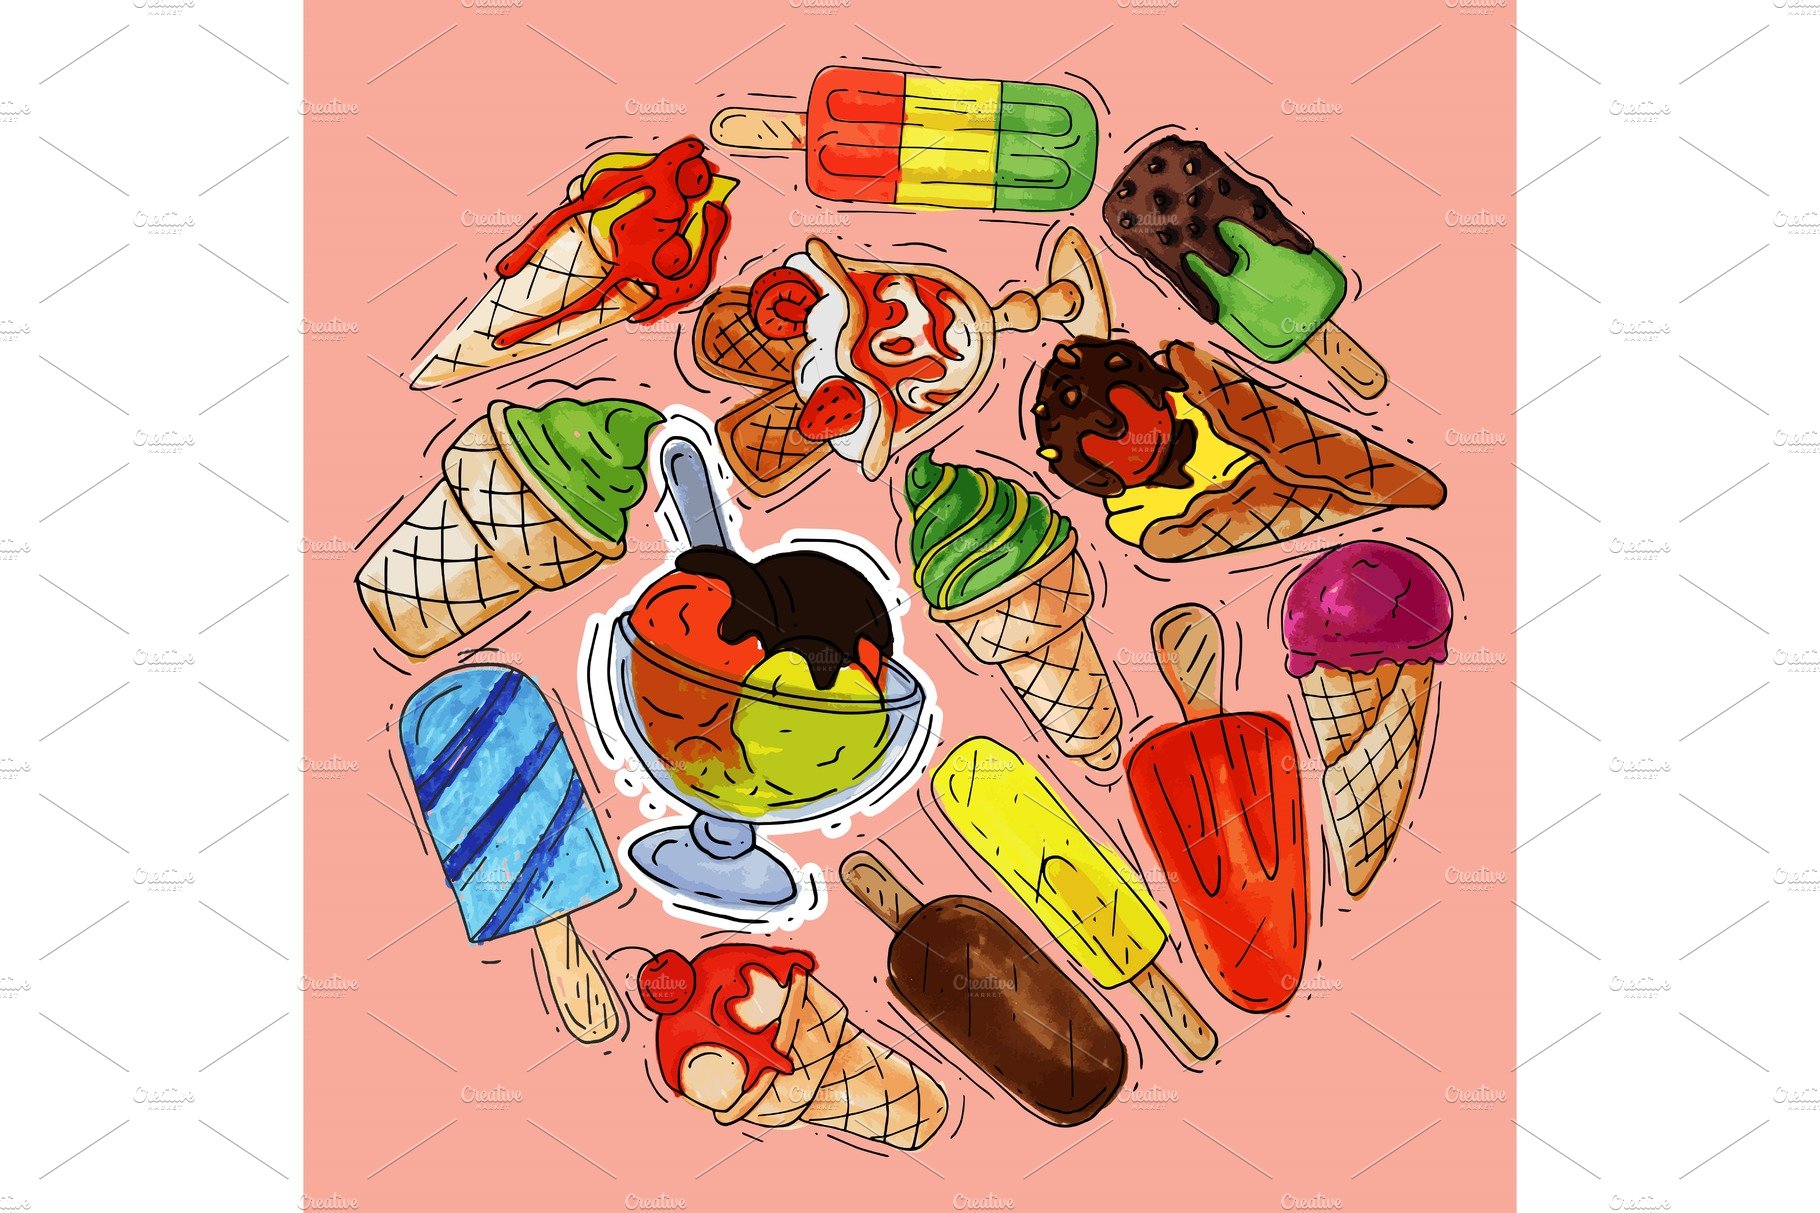 Ice cream round pattern summer cover image.